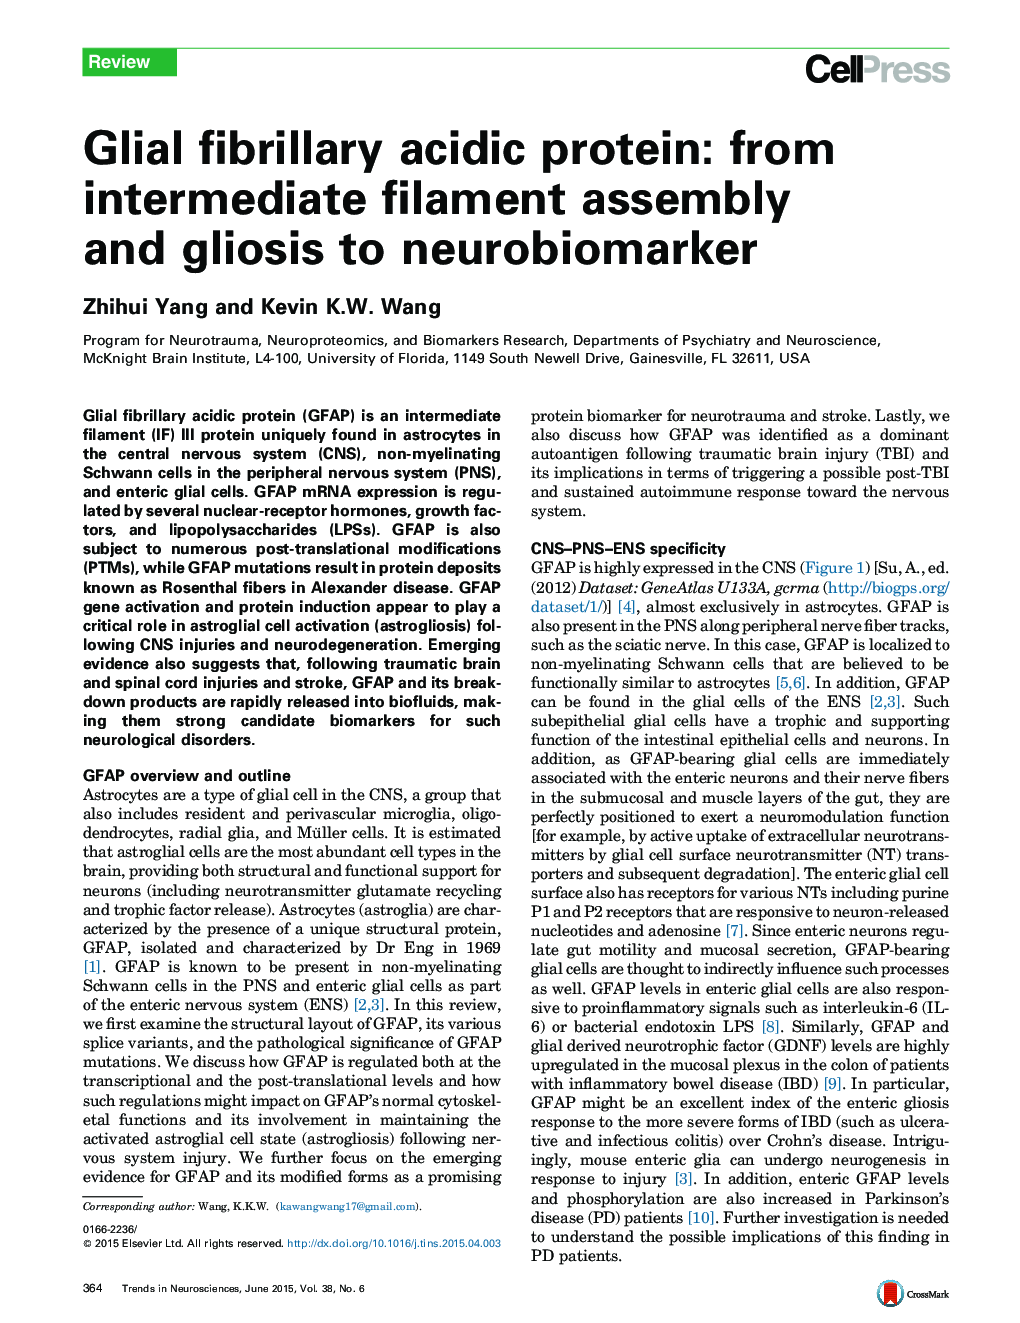 Glial fibrillary acidic protein: from intermediate filament assembly and gliosis to neurobiomarker